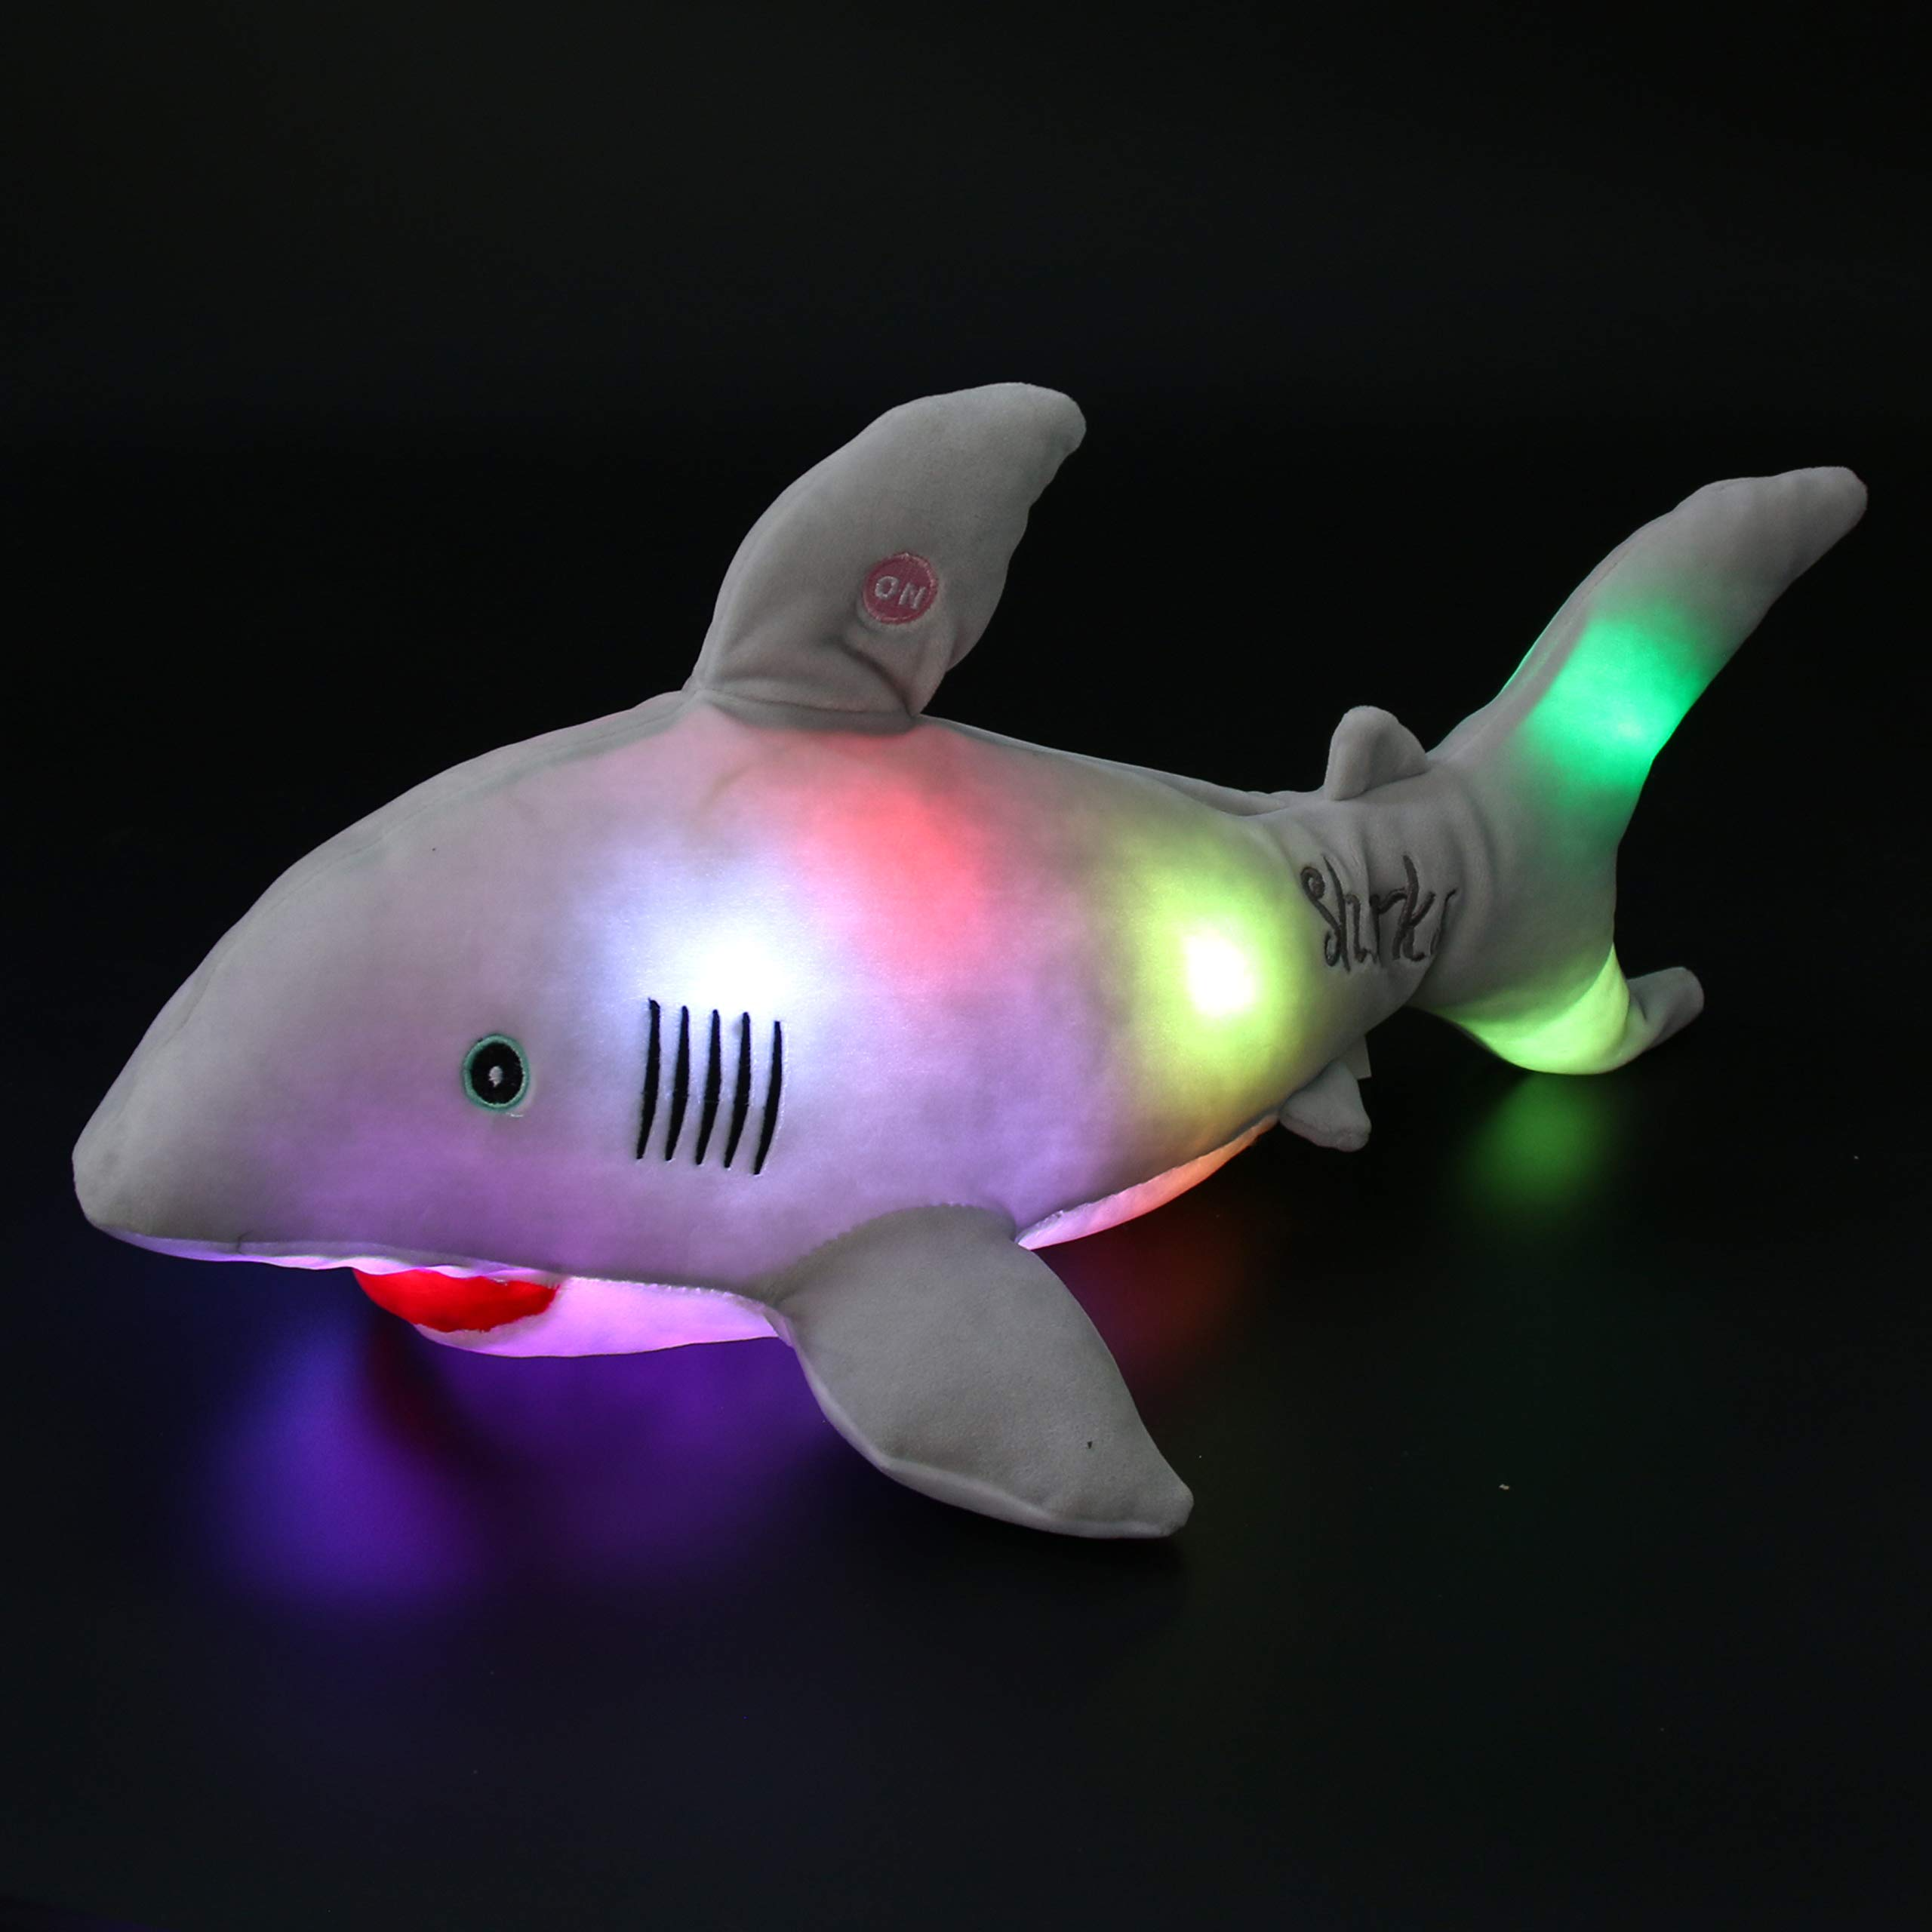 Bstaofy Light up Shark Stuffed Animal Glow Plush Ocean - Glow Guards